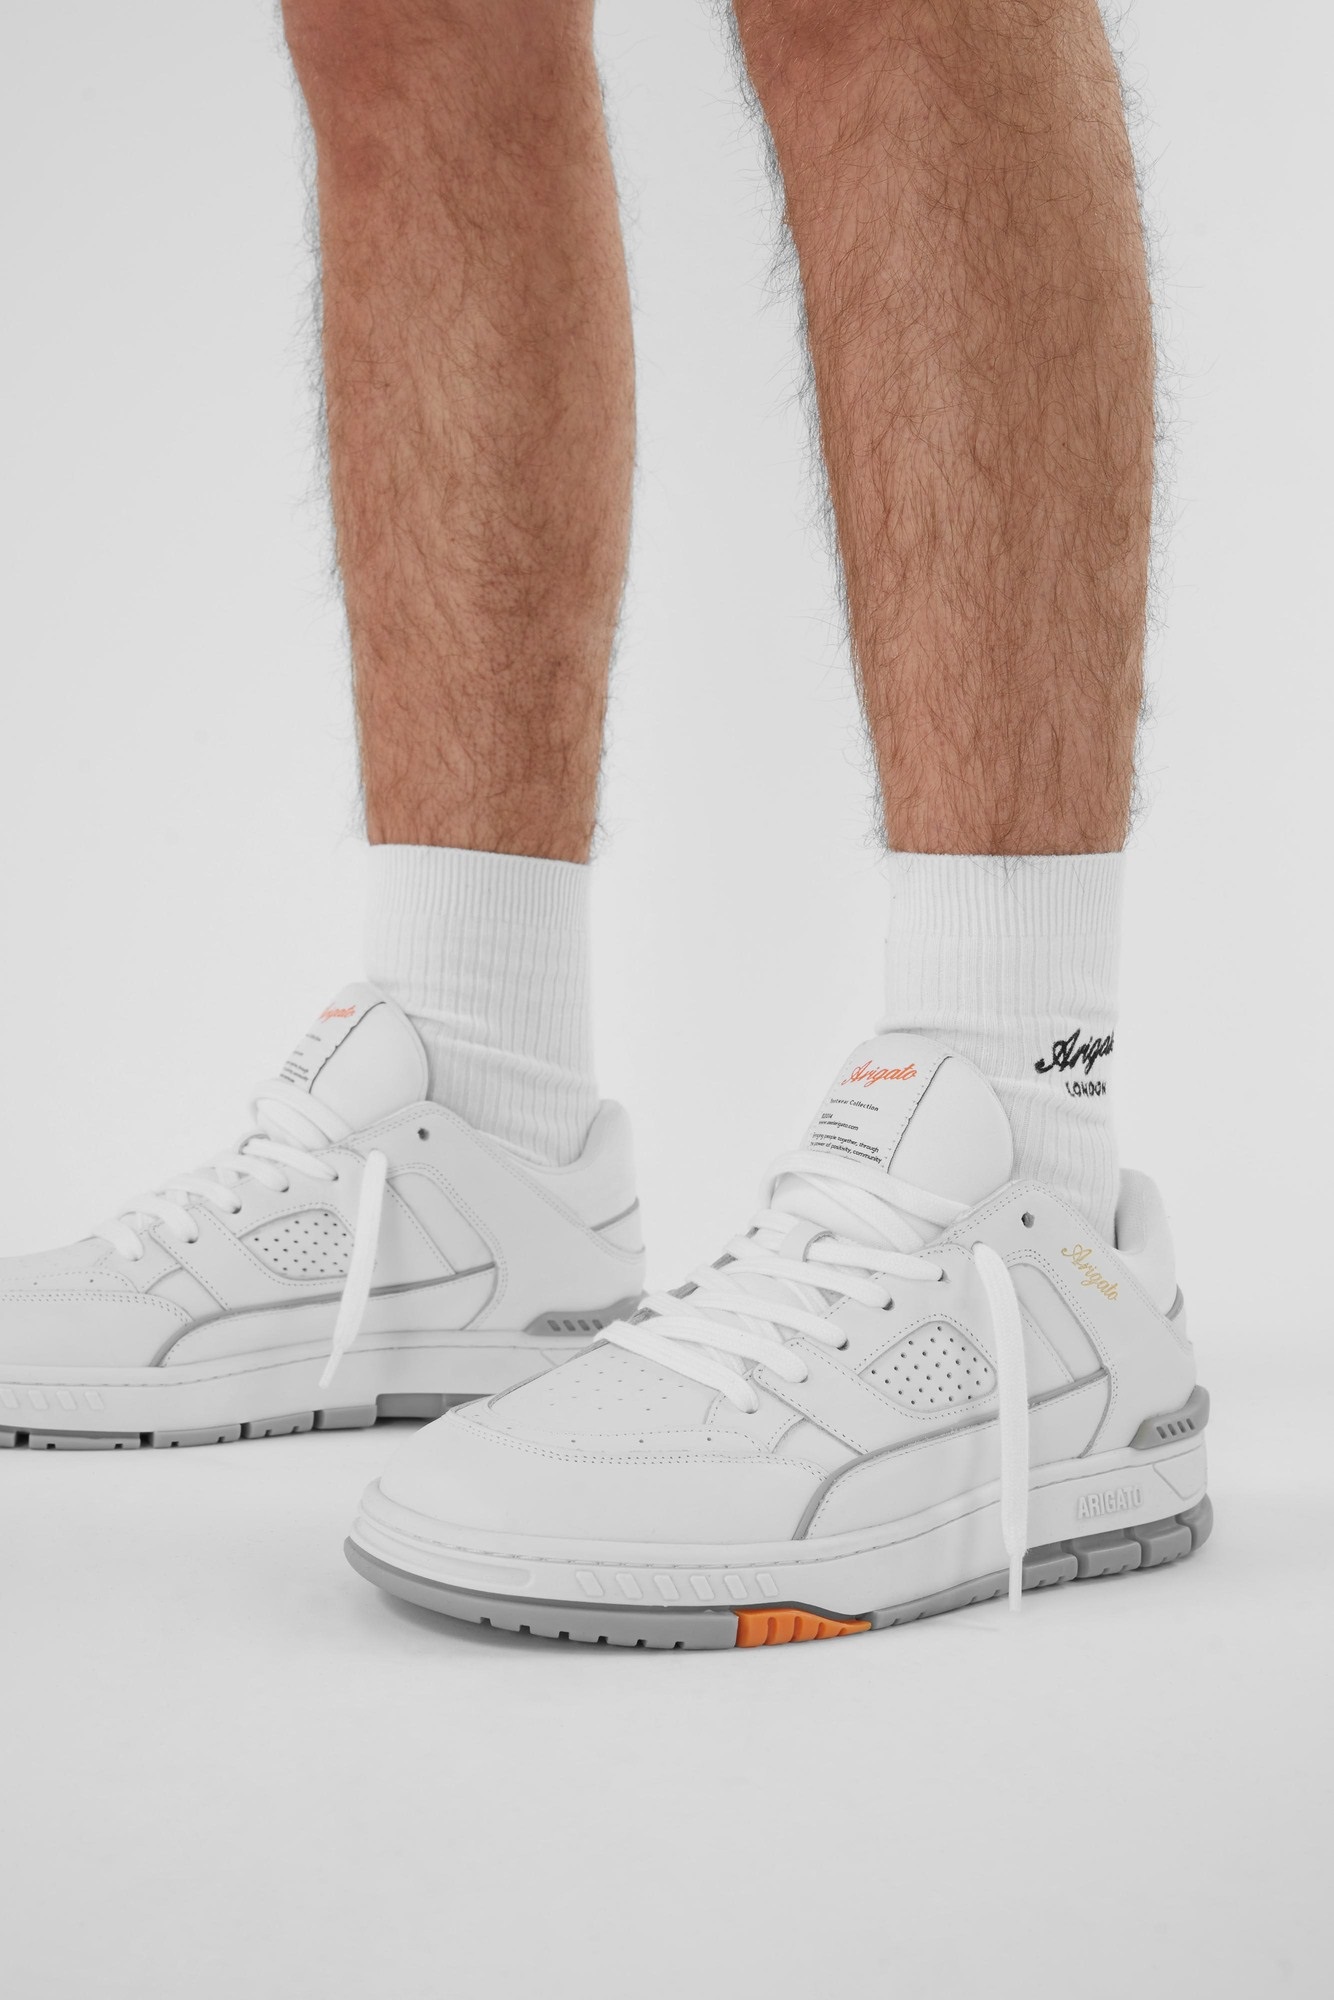 AXEL ARIGATO Area Sneaker in White/Grey